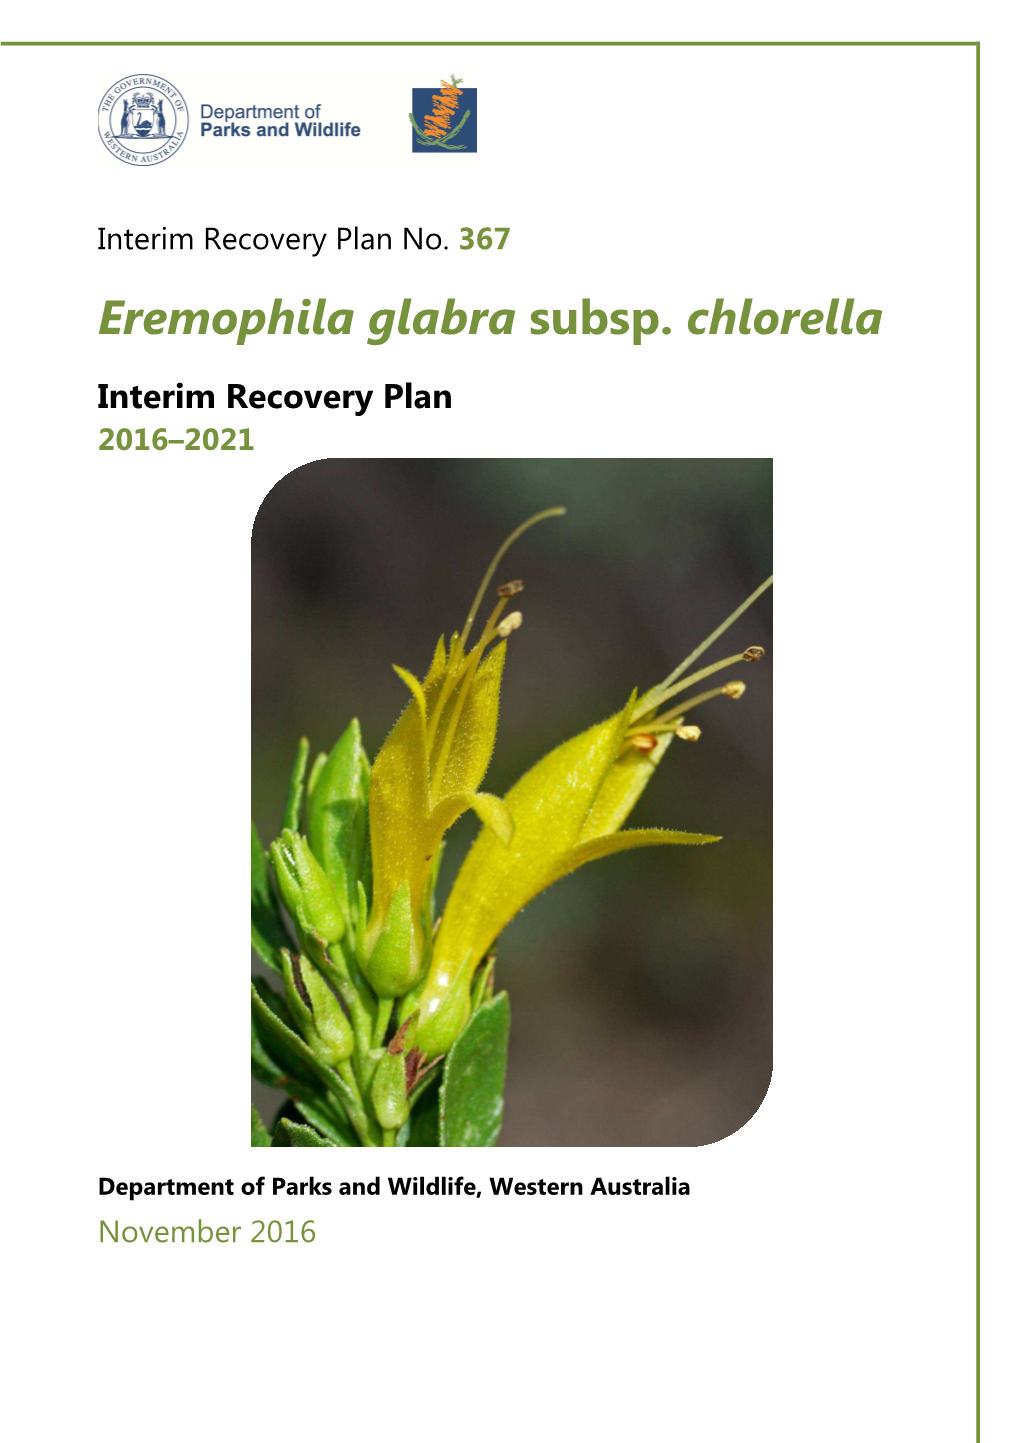 Eremophila Glabra Subsp. Chlorella IRP367 2016 2021 Web Version